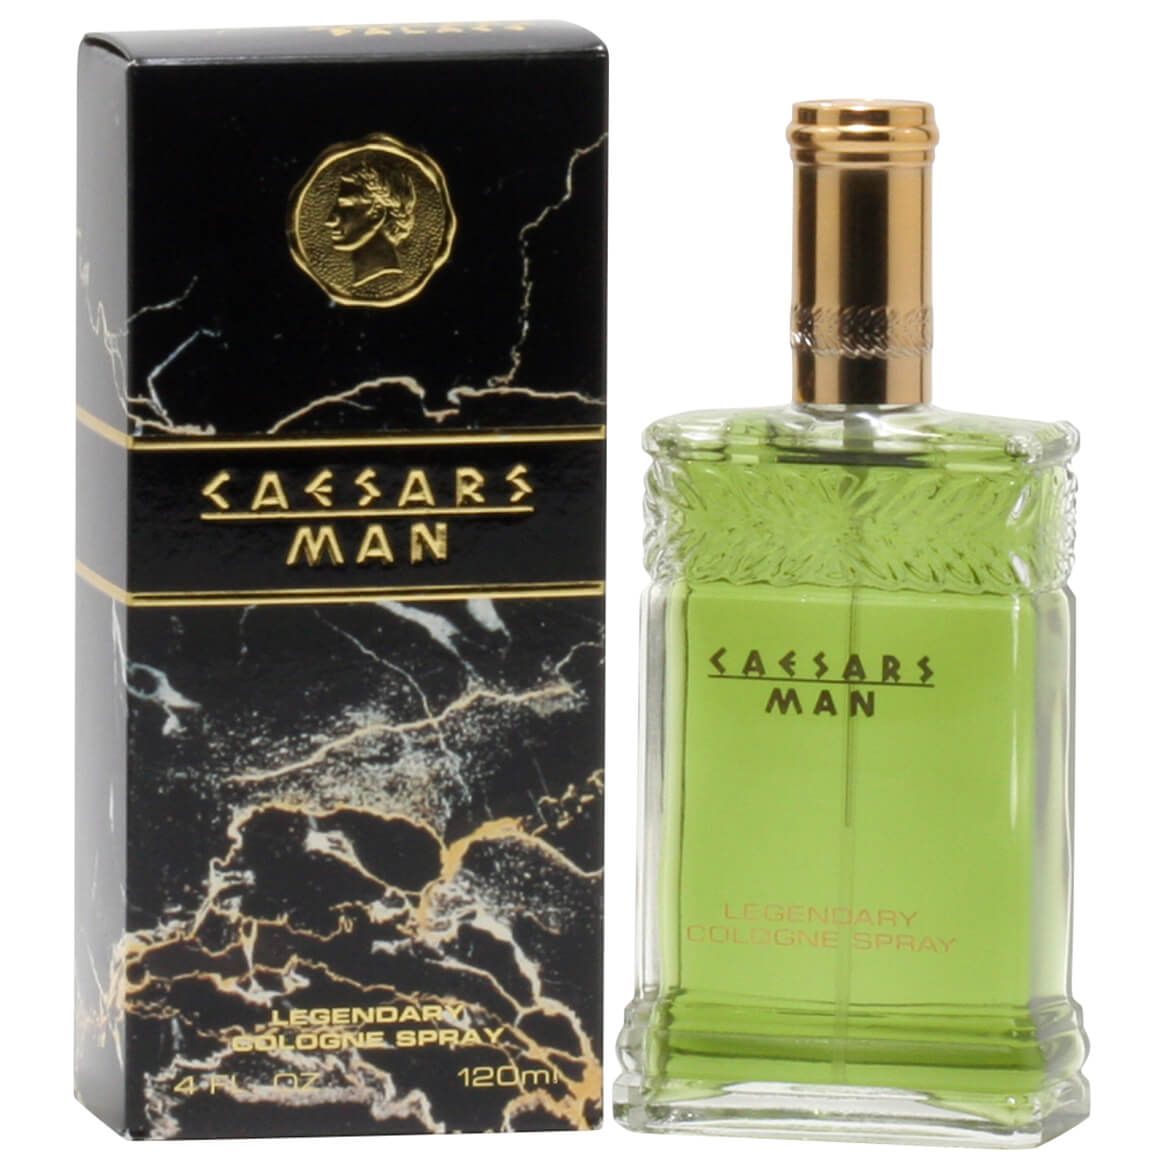 Caesar's Man Cologne Spray + '-' + 352081